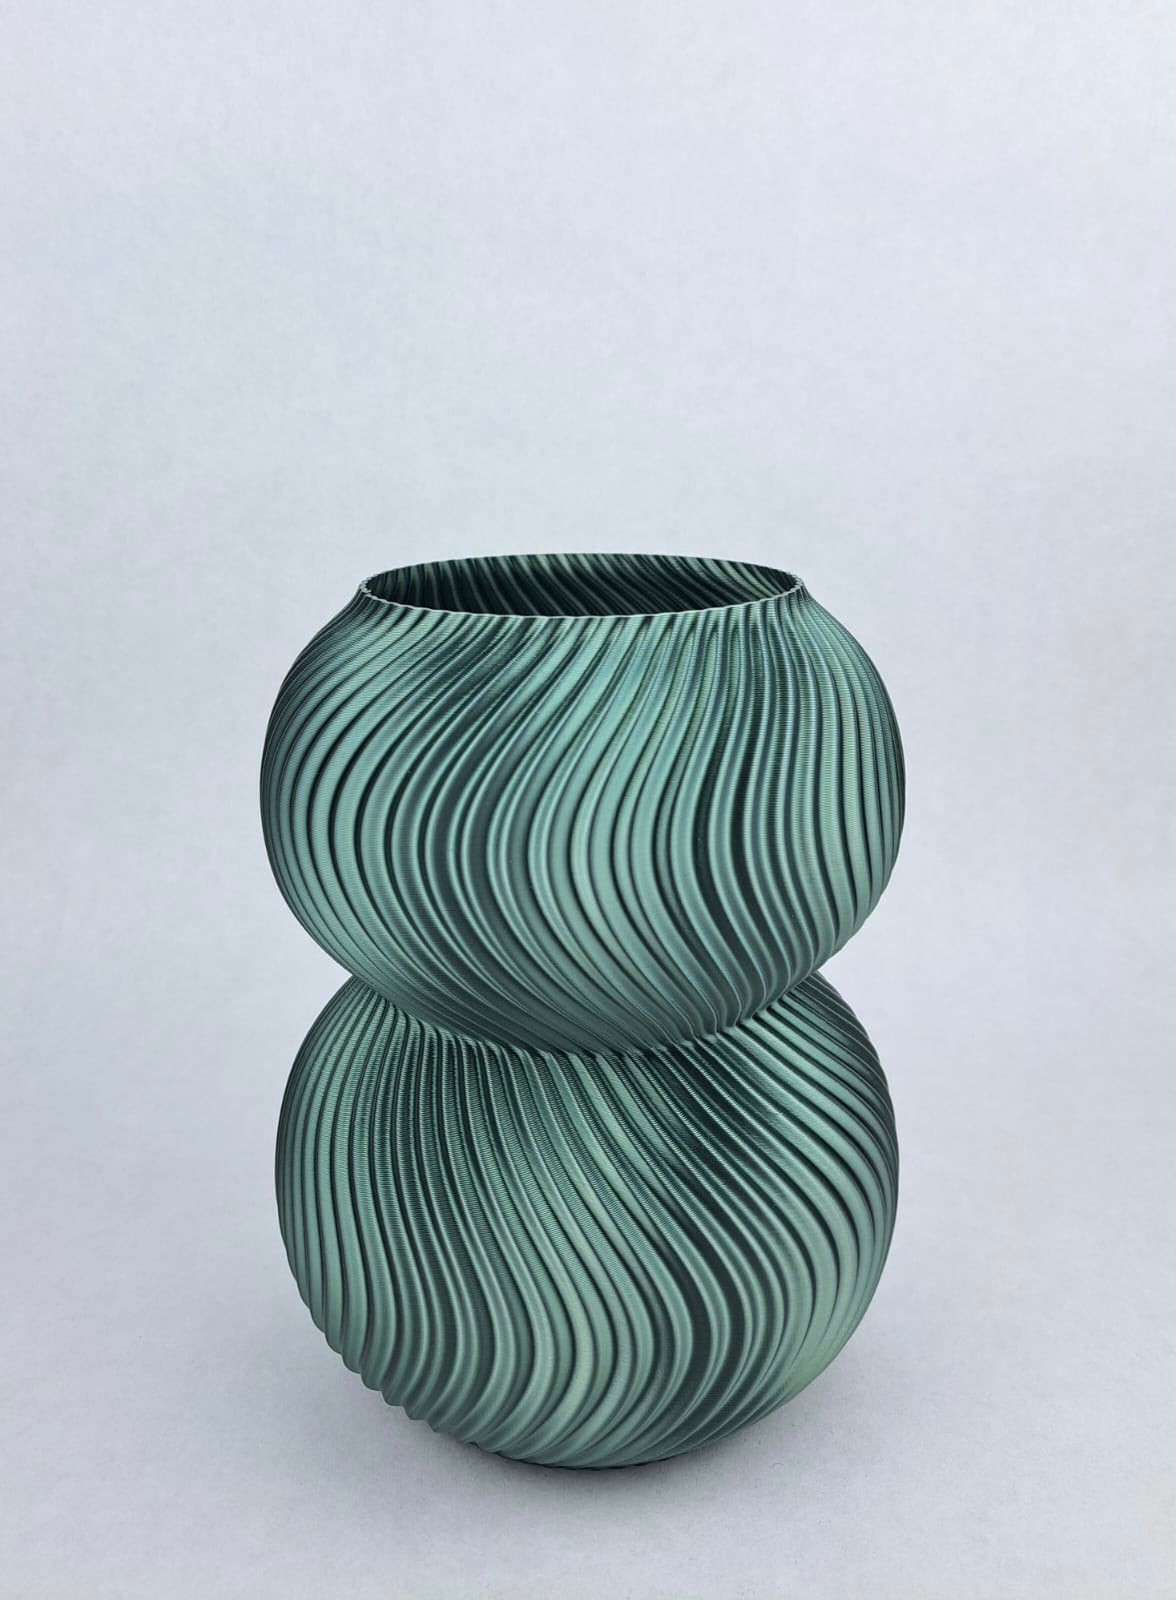 Vase “Infinity” with glass